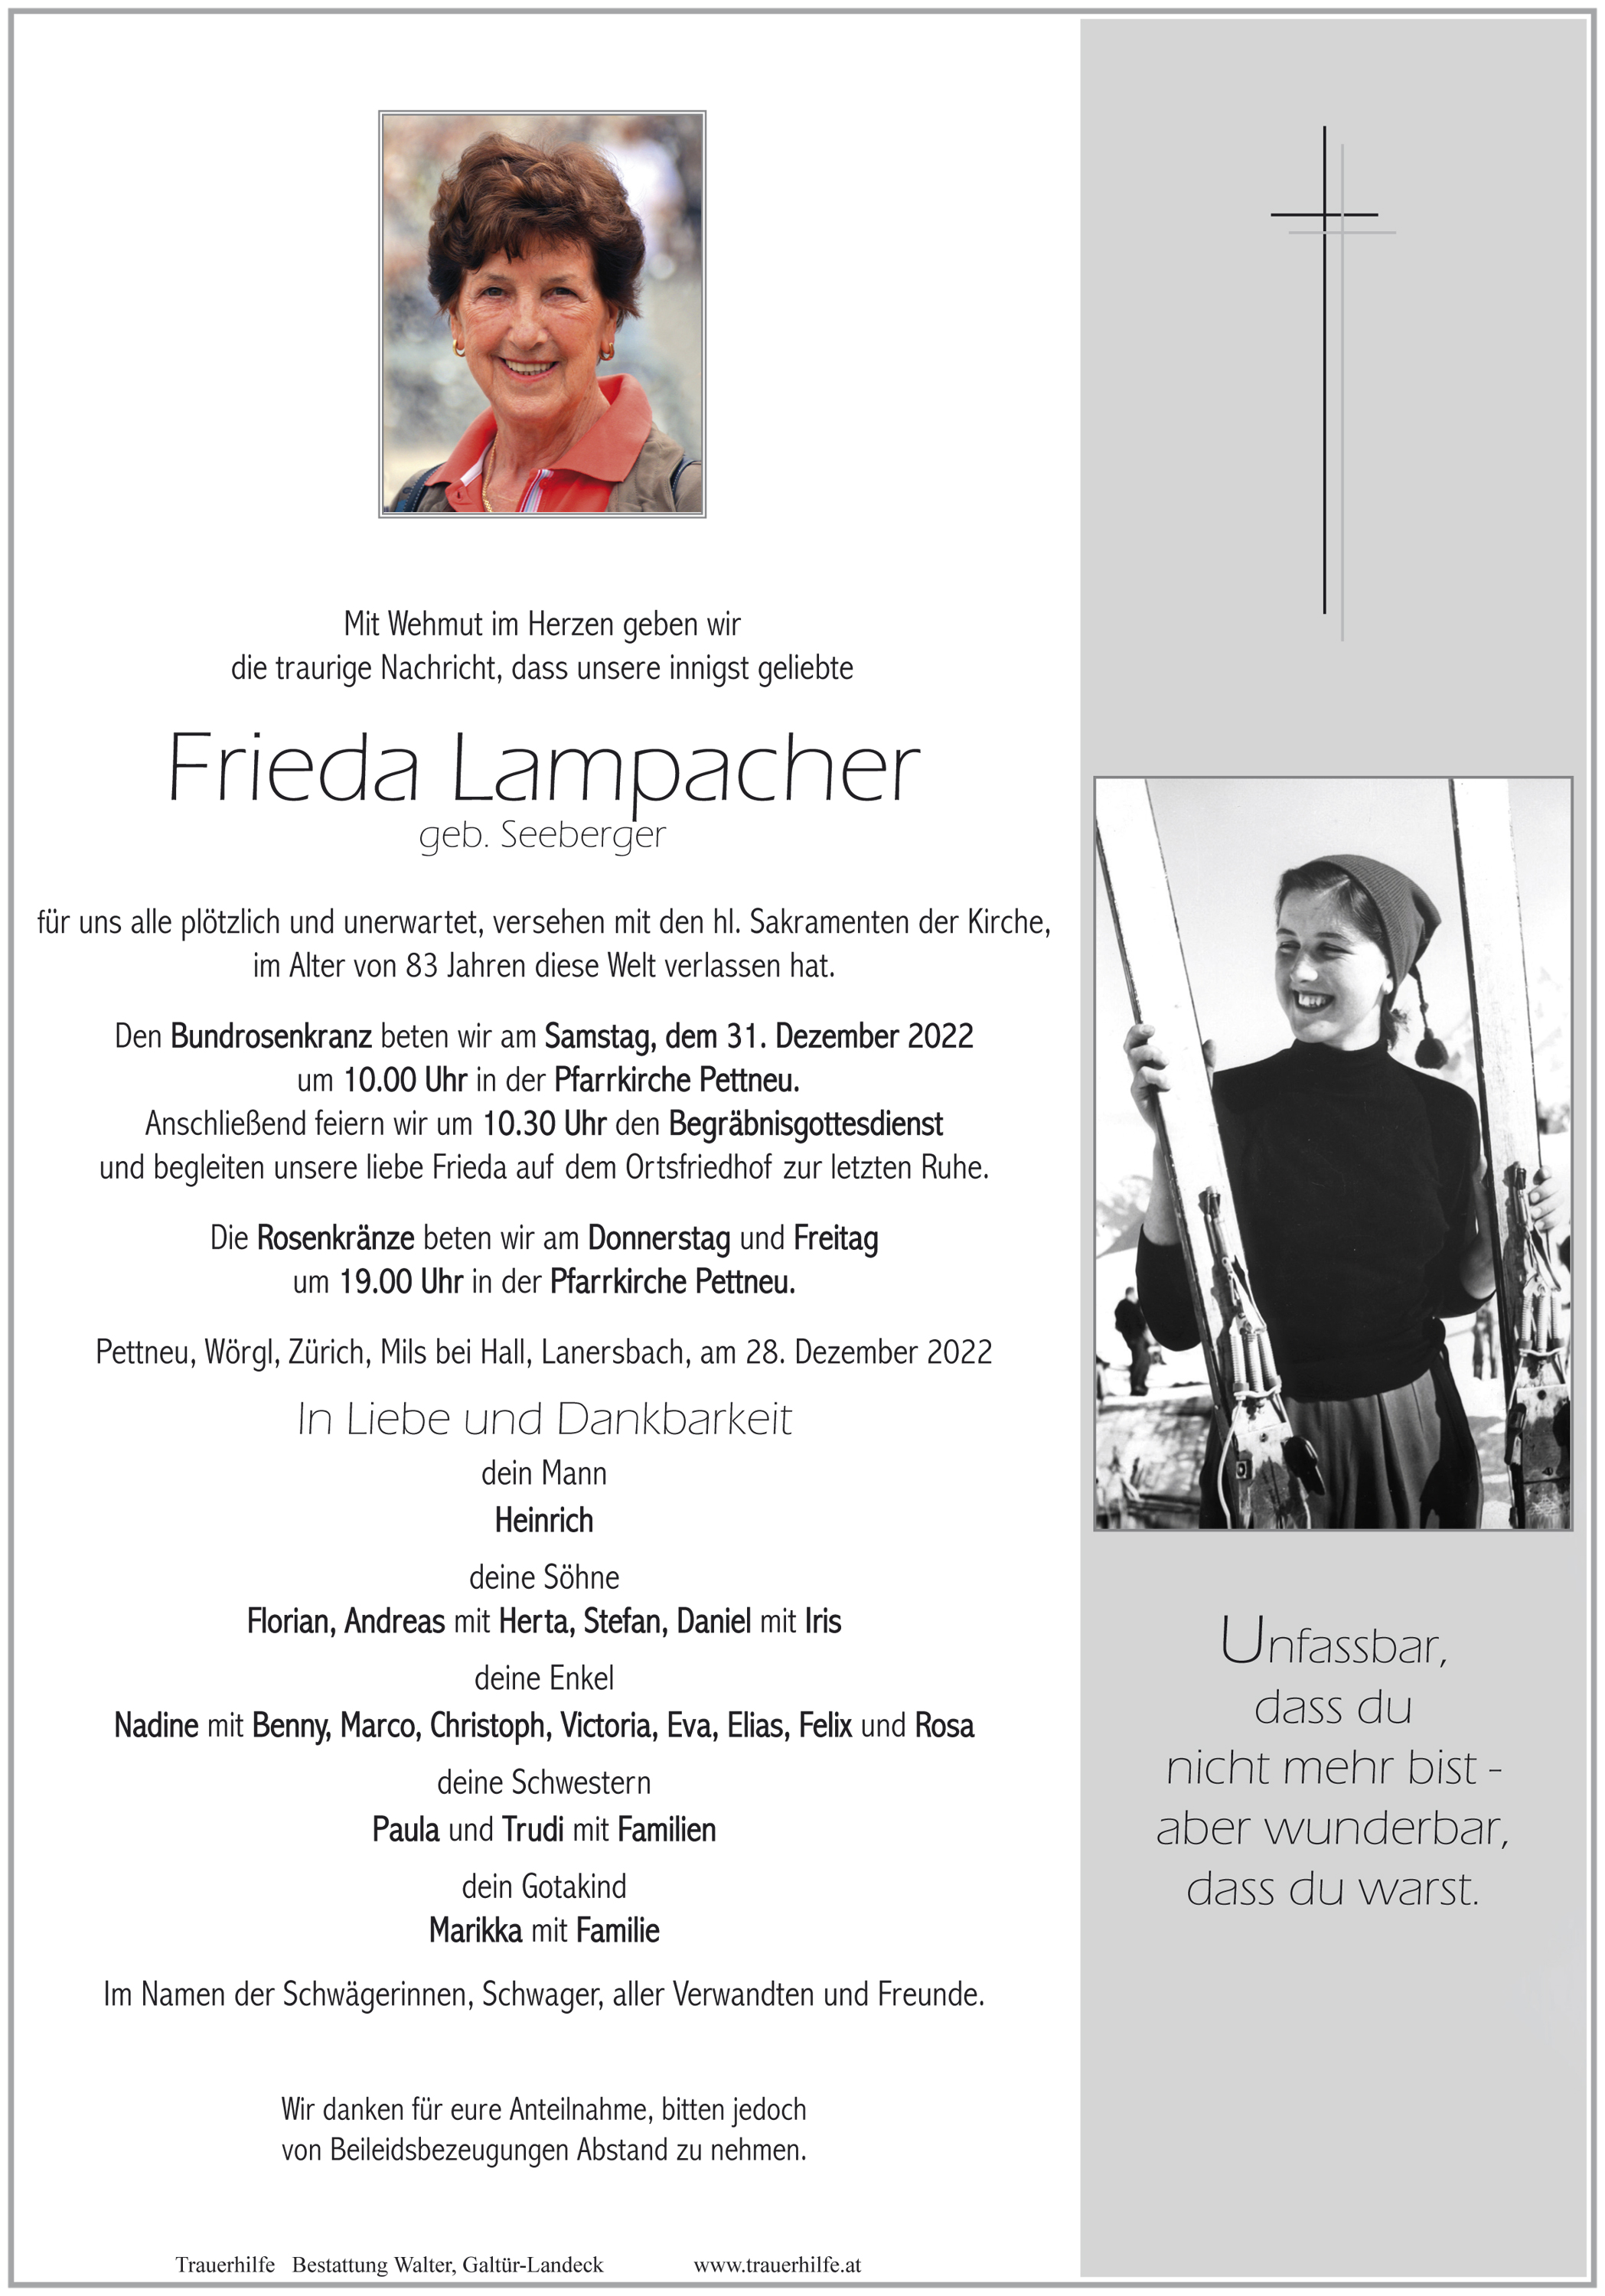 Frieda Lampacher